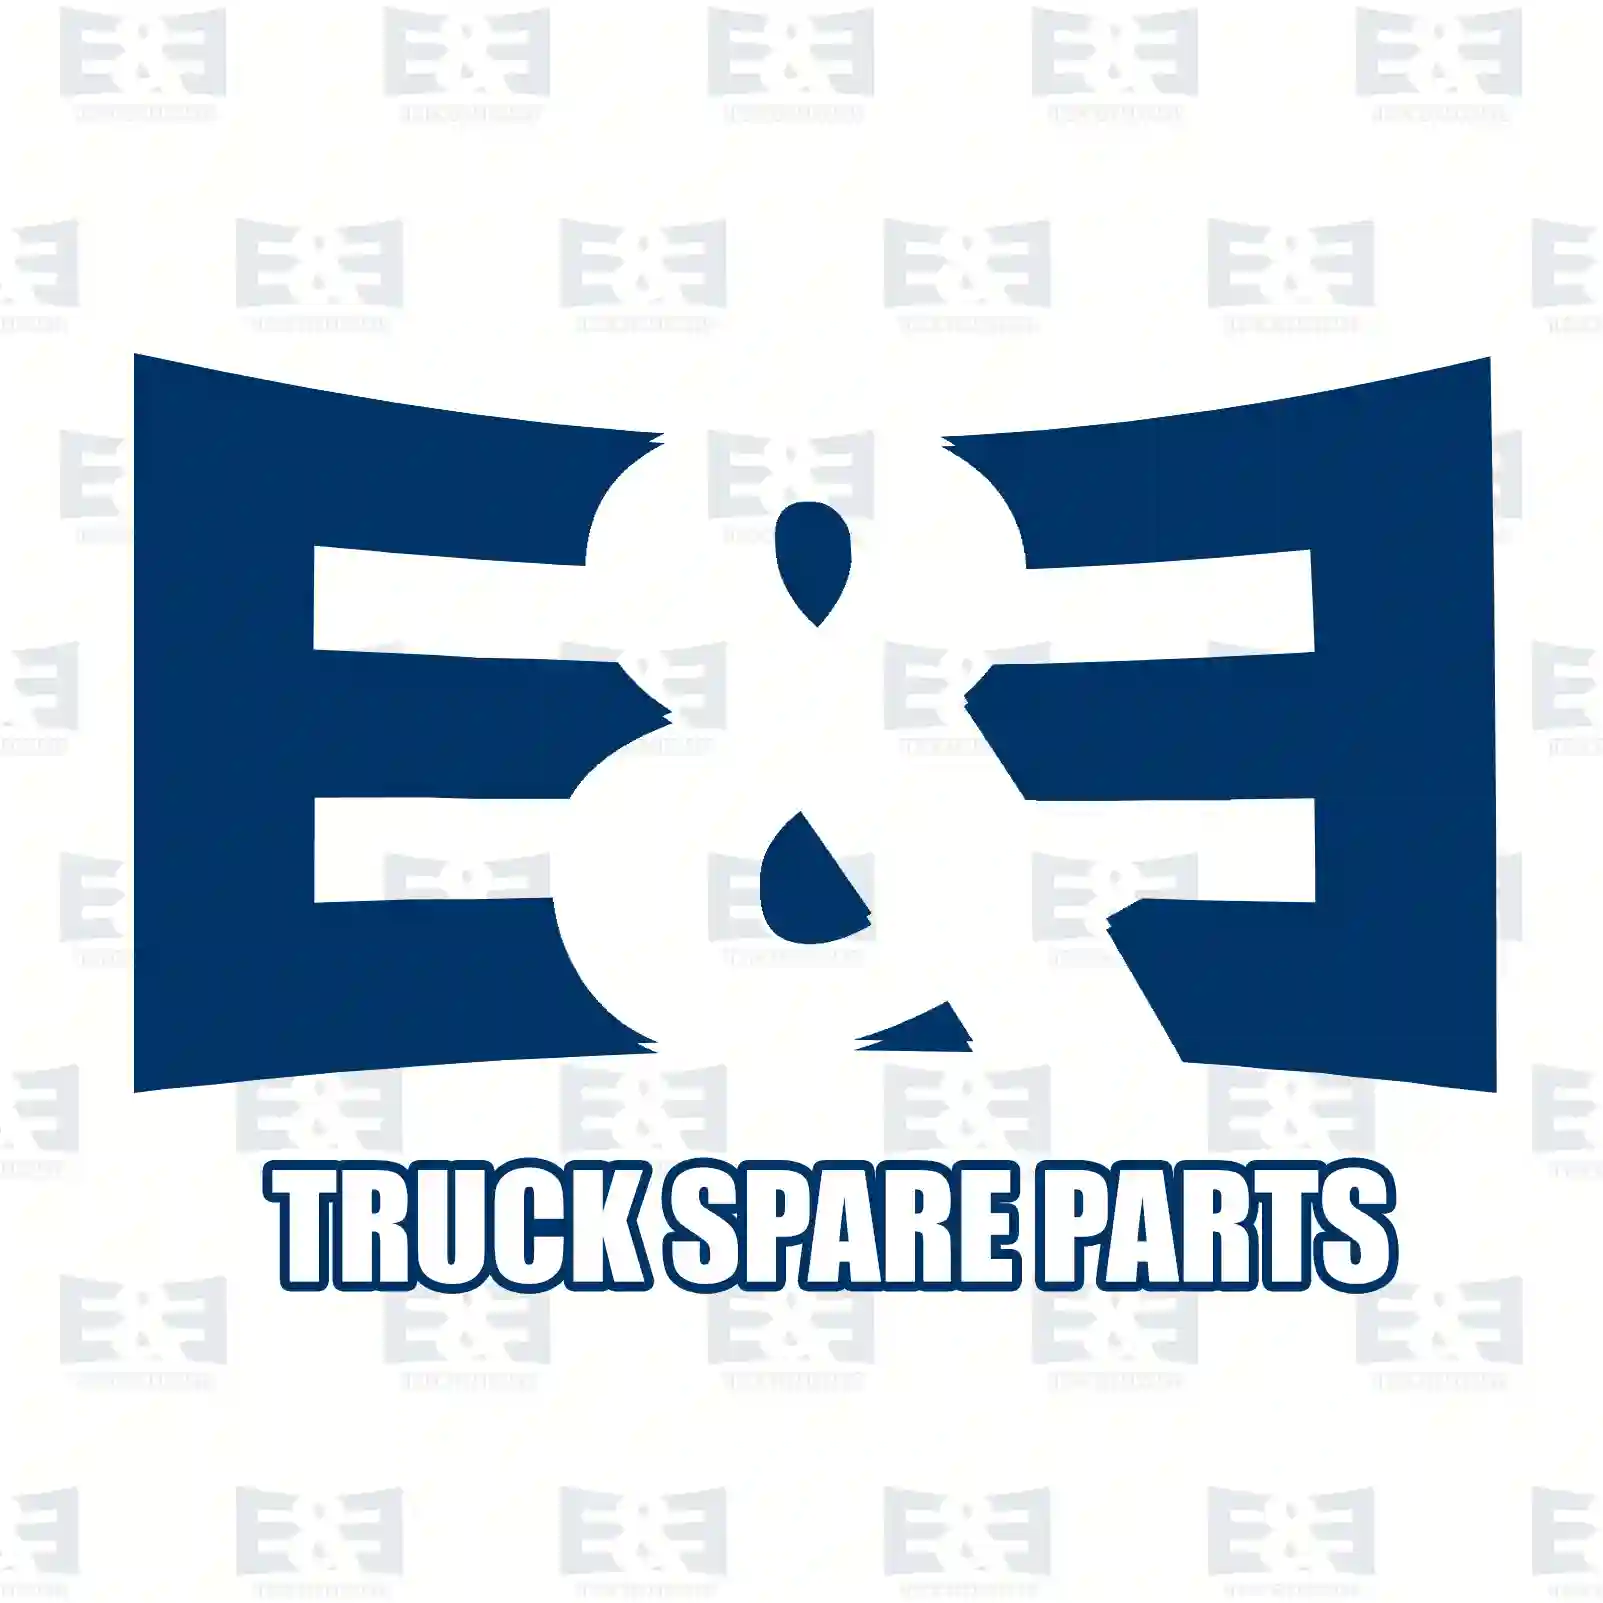 Load tester, starter battery, WEEE-Reg-No. DE 57605858, 2E2297623, ] ||  2E2297623 E&E Truck Spare Parts | Truck Spare Parts, Auotomotive Spare Parts Load tester, starter battery, WEEE-Reg-No. DE 57605858, 2E2297623, ] ||  2E2297623 E&E Truck Spare Parts | Truck Spare Parts, Auotomotive Spare Parts